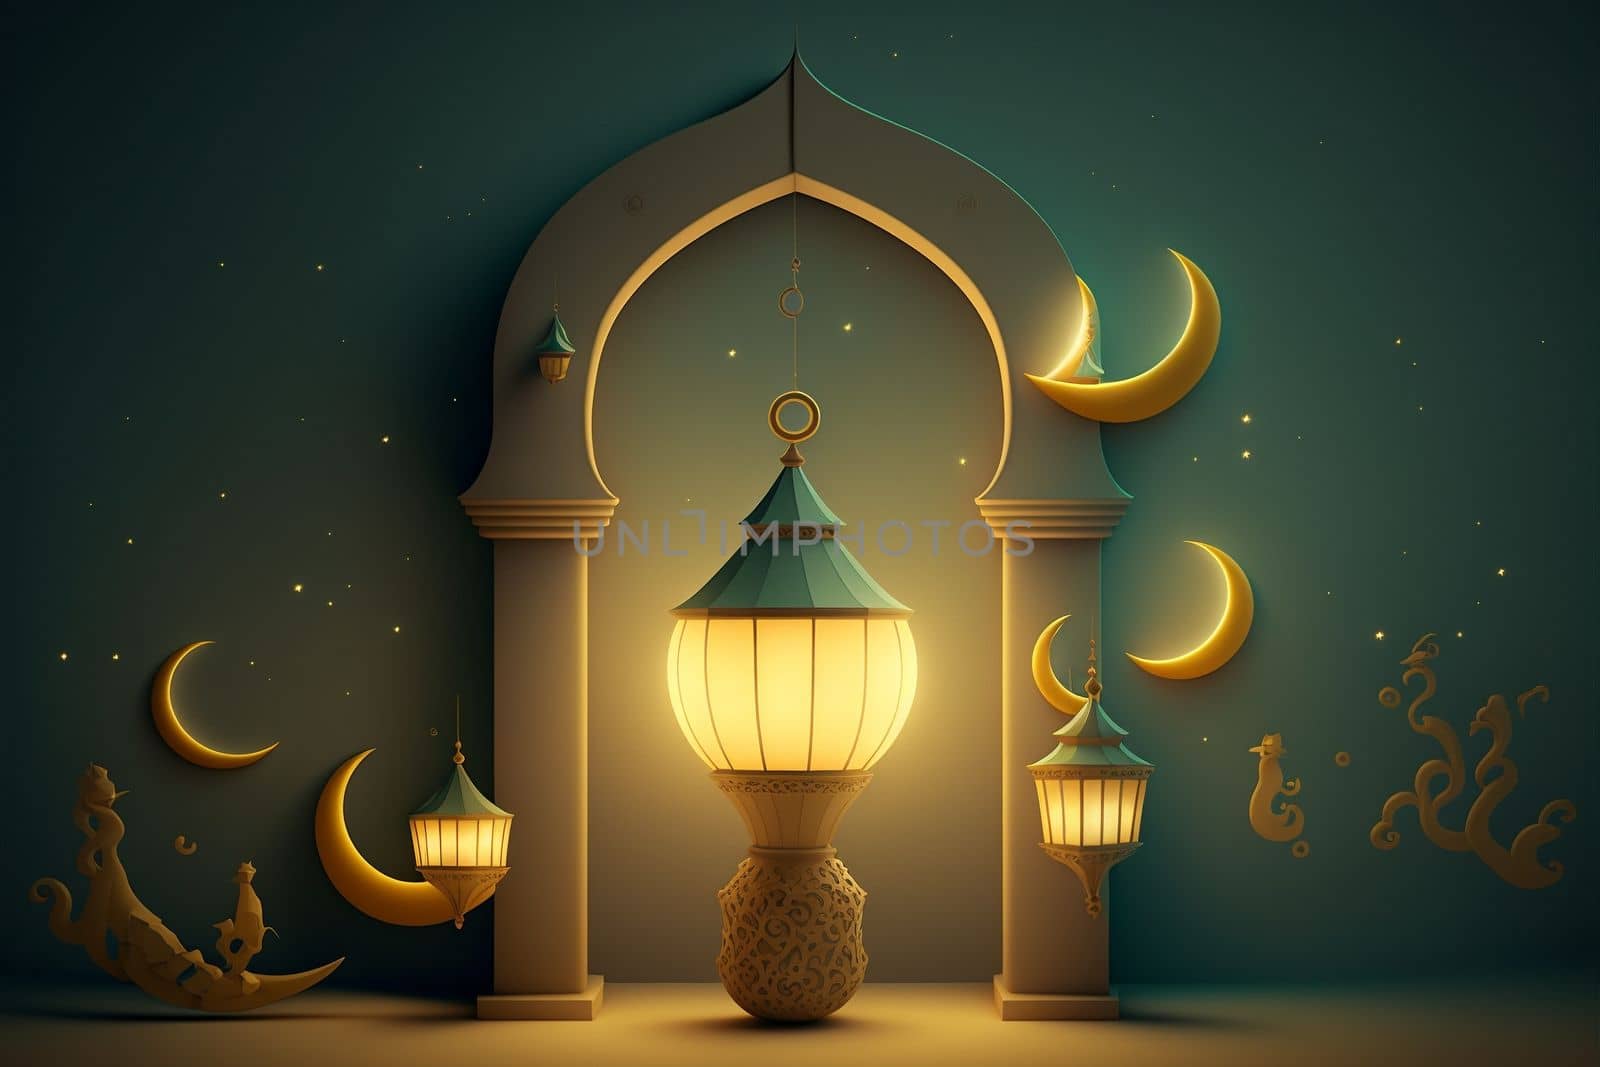 Ramadan Karim greeting card with a serene mosque background with a beautiful glowing lantern